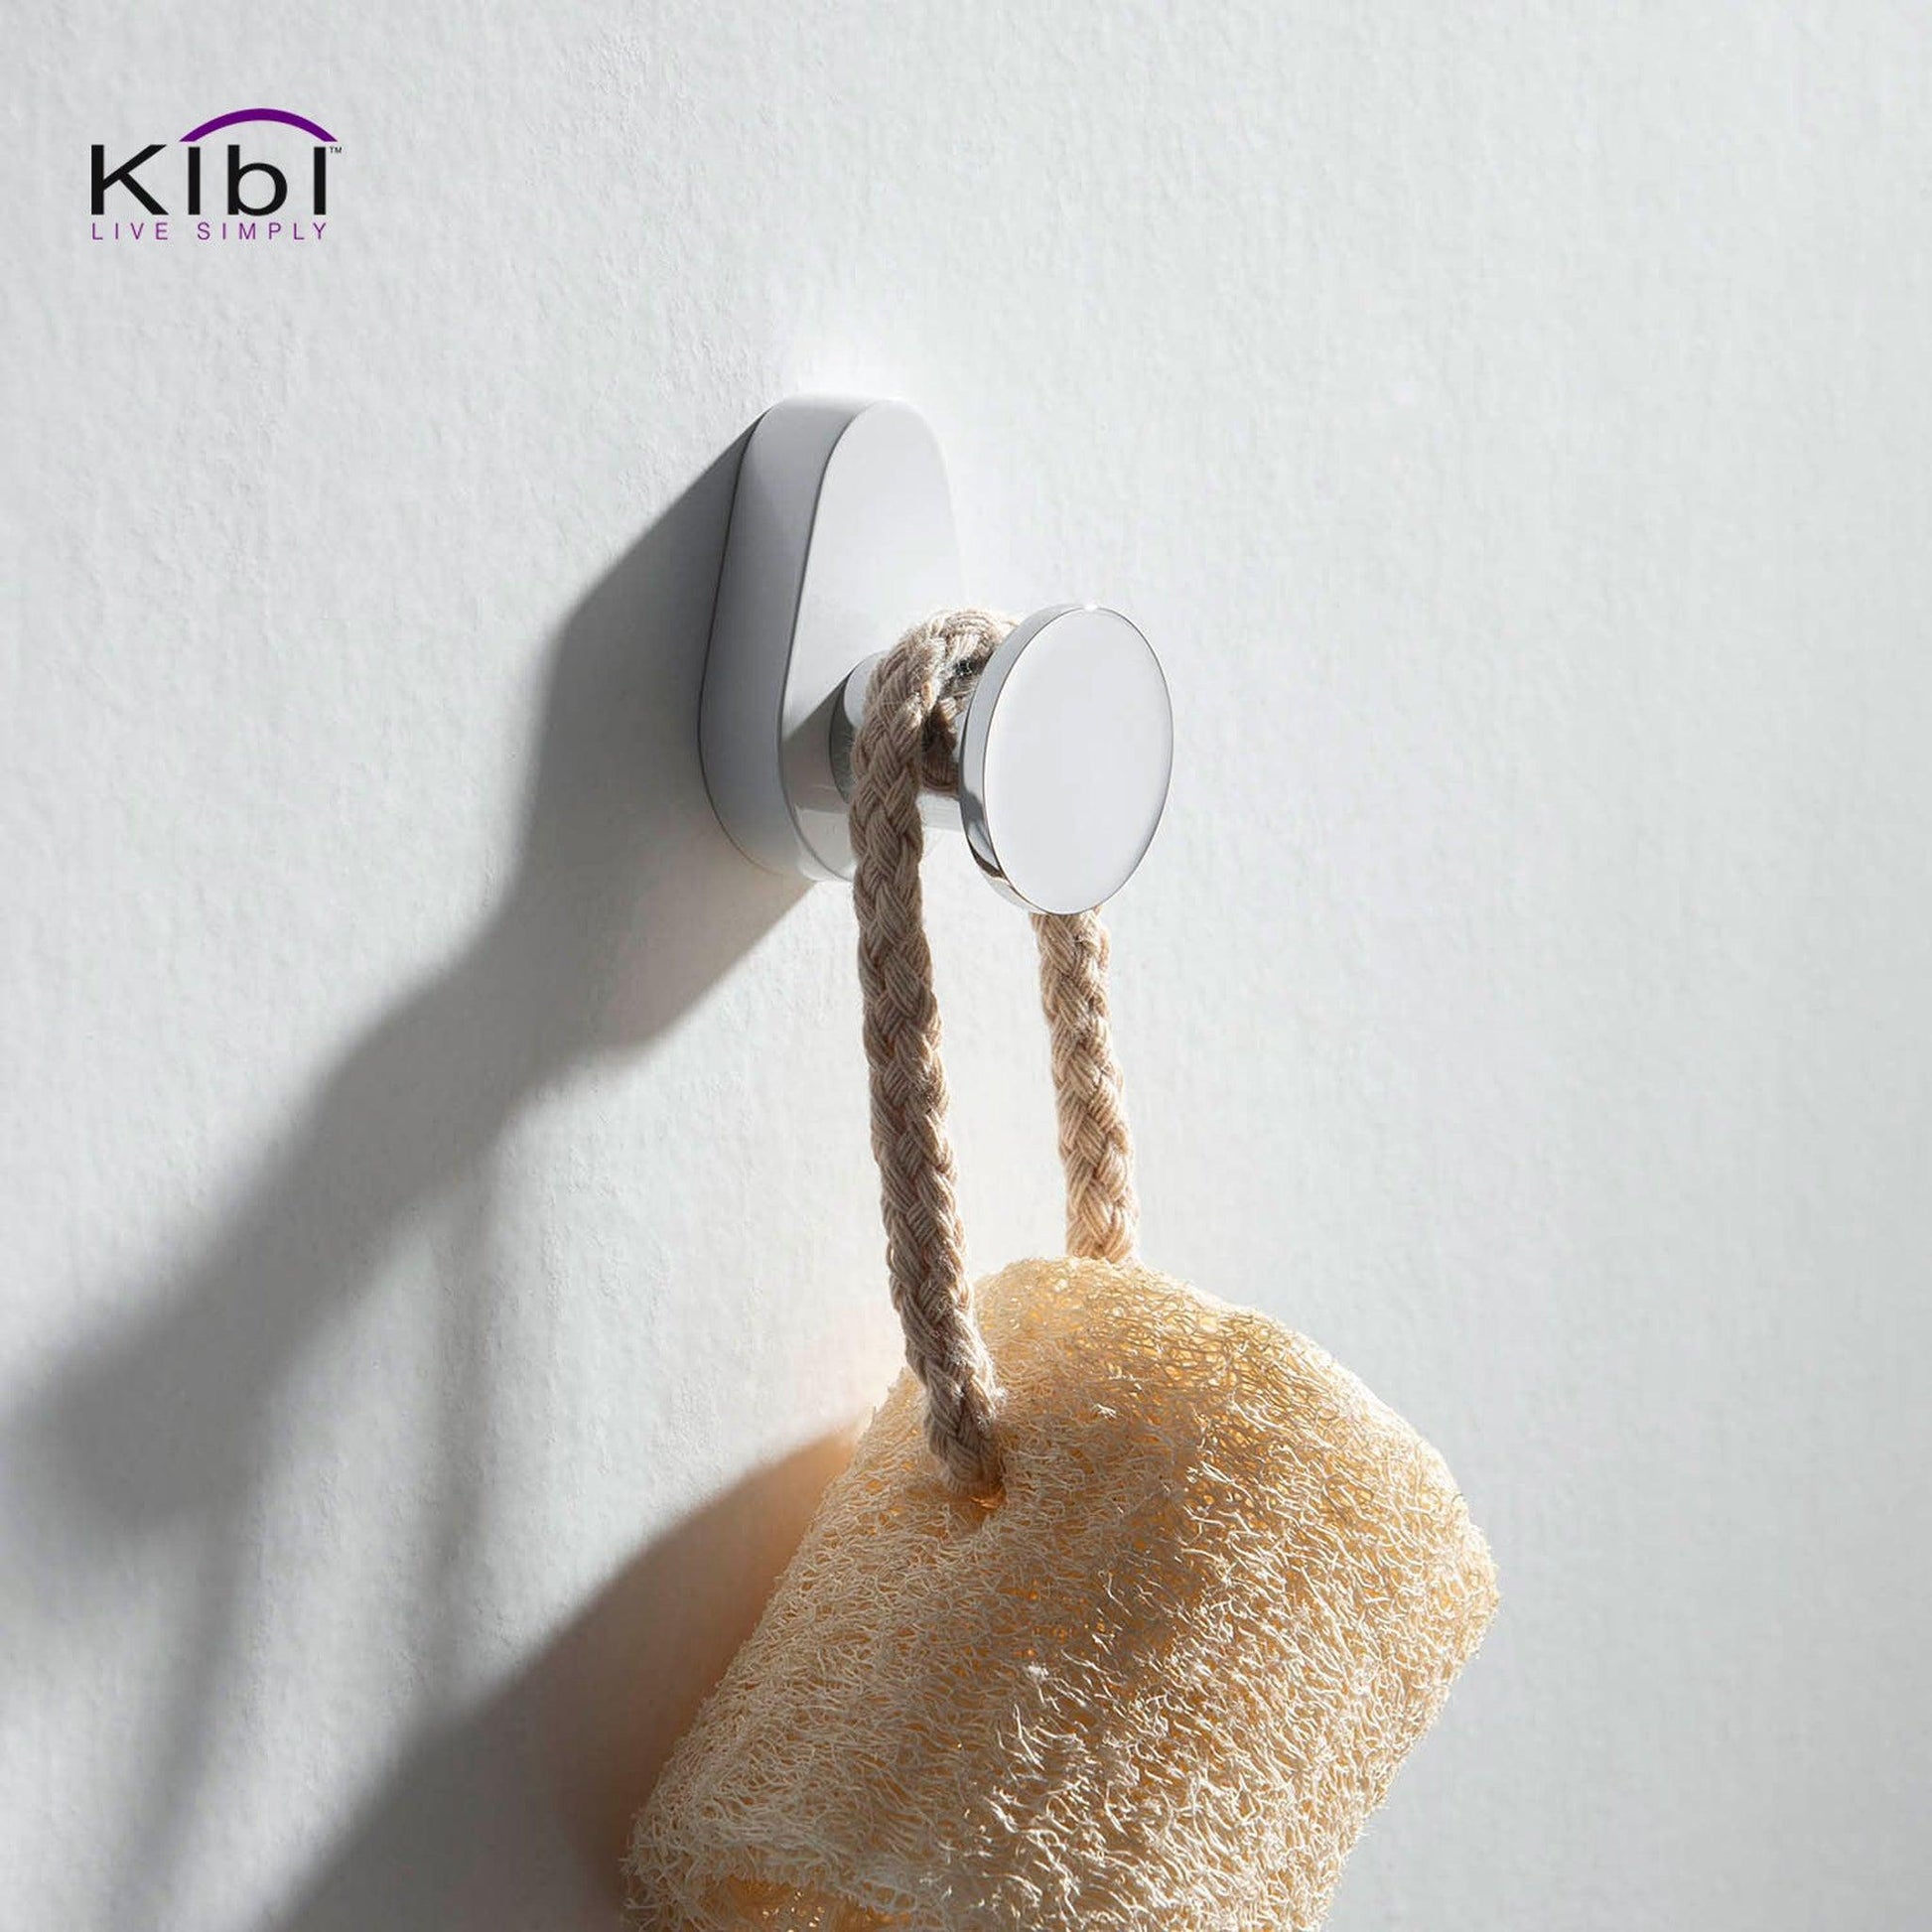 KIBI Volcano Bathroom Robe Hook in Chrome White Finish